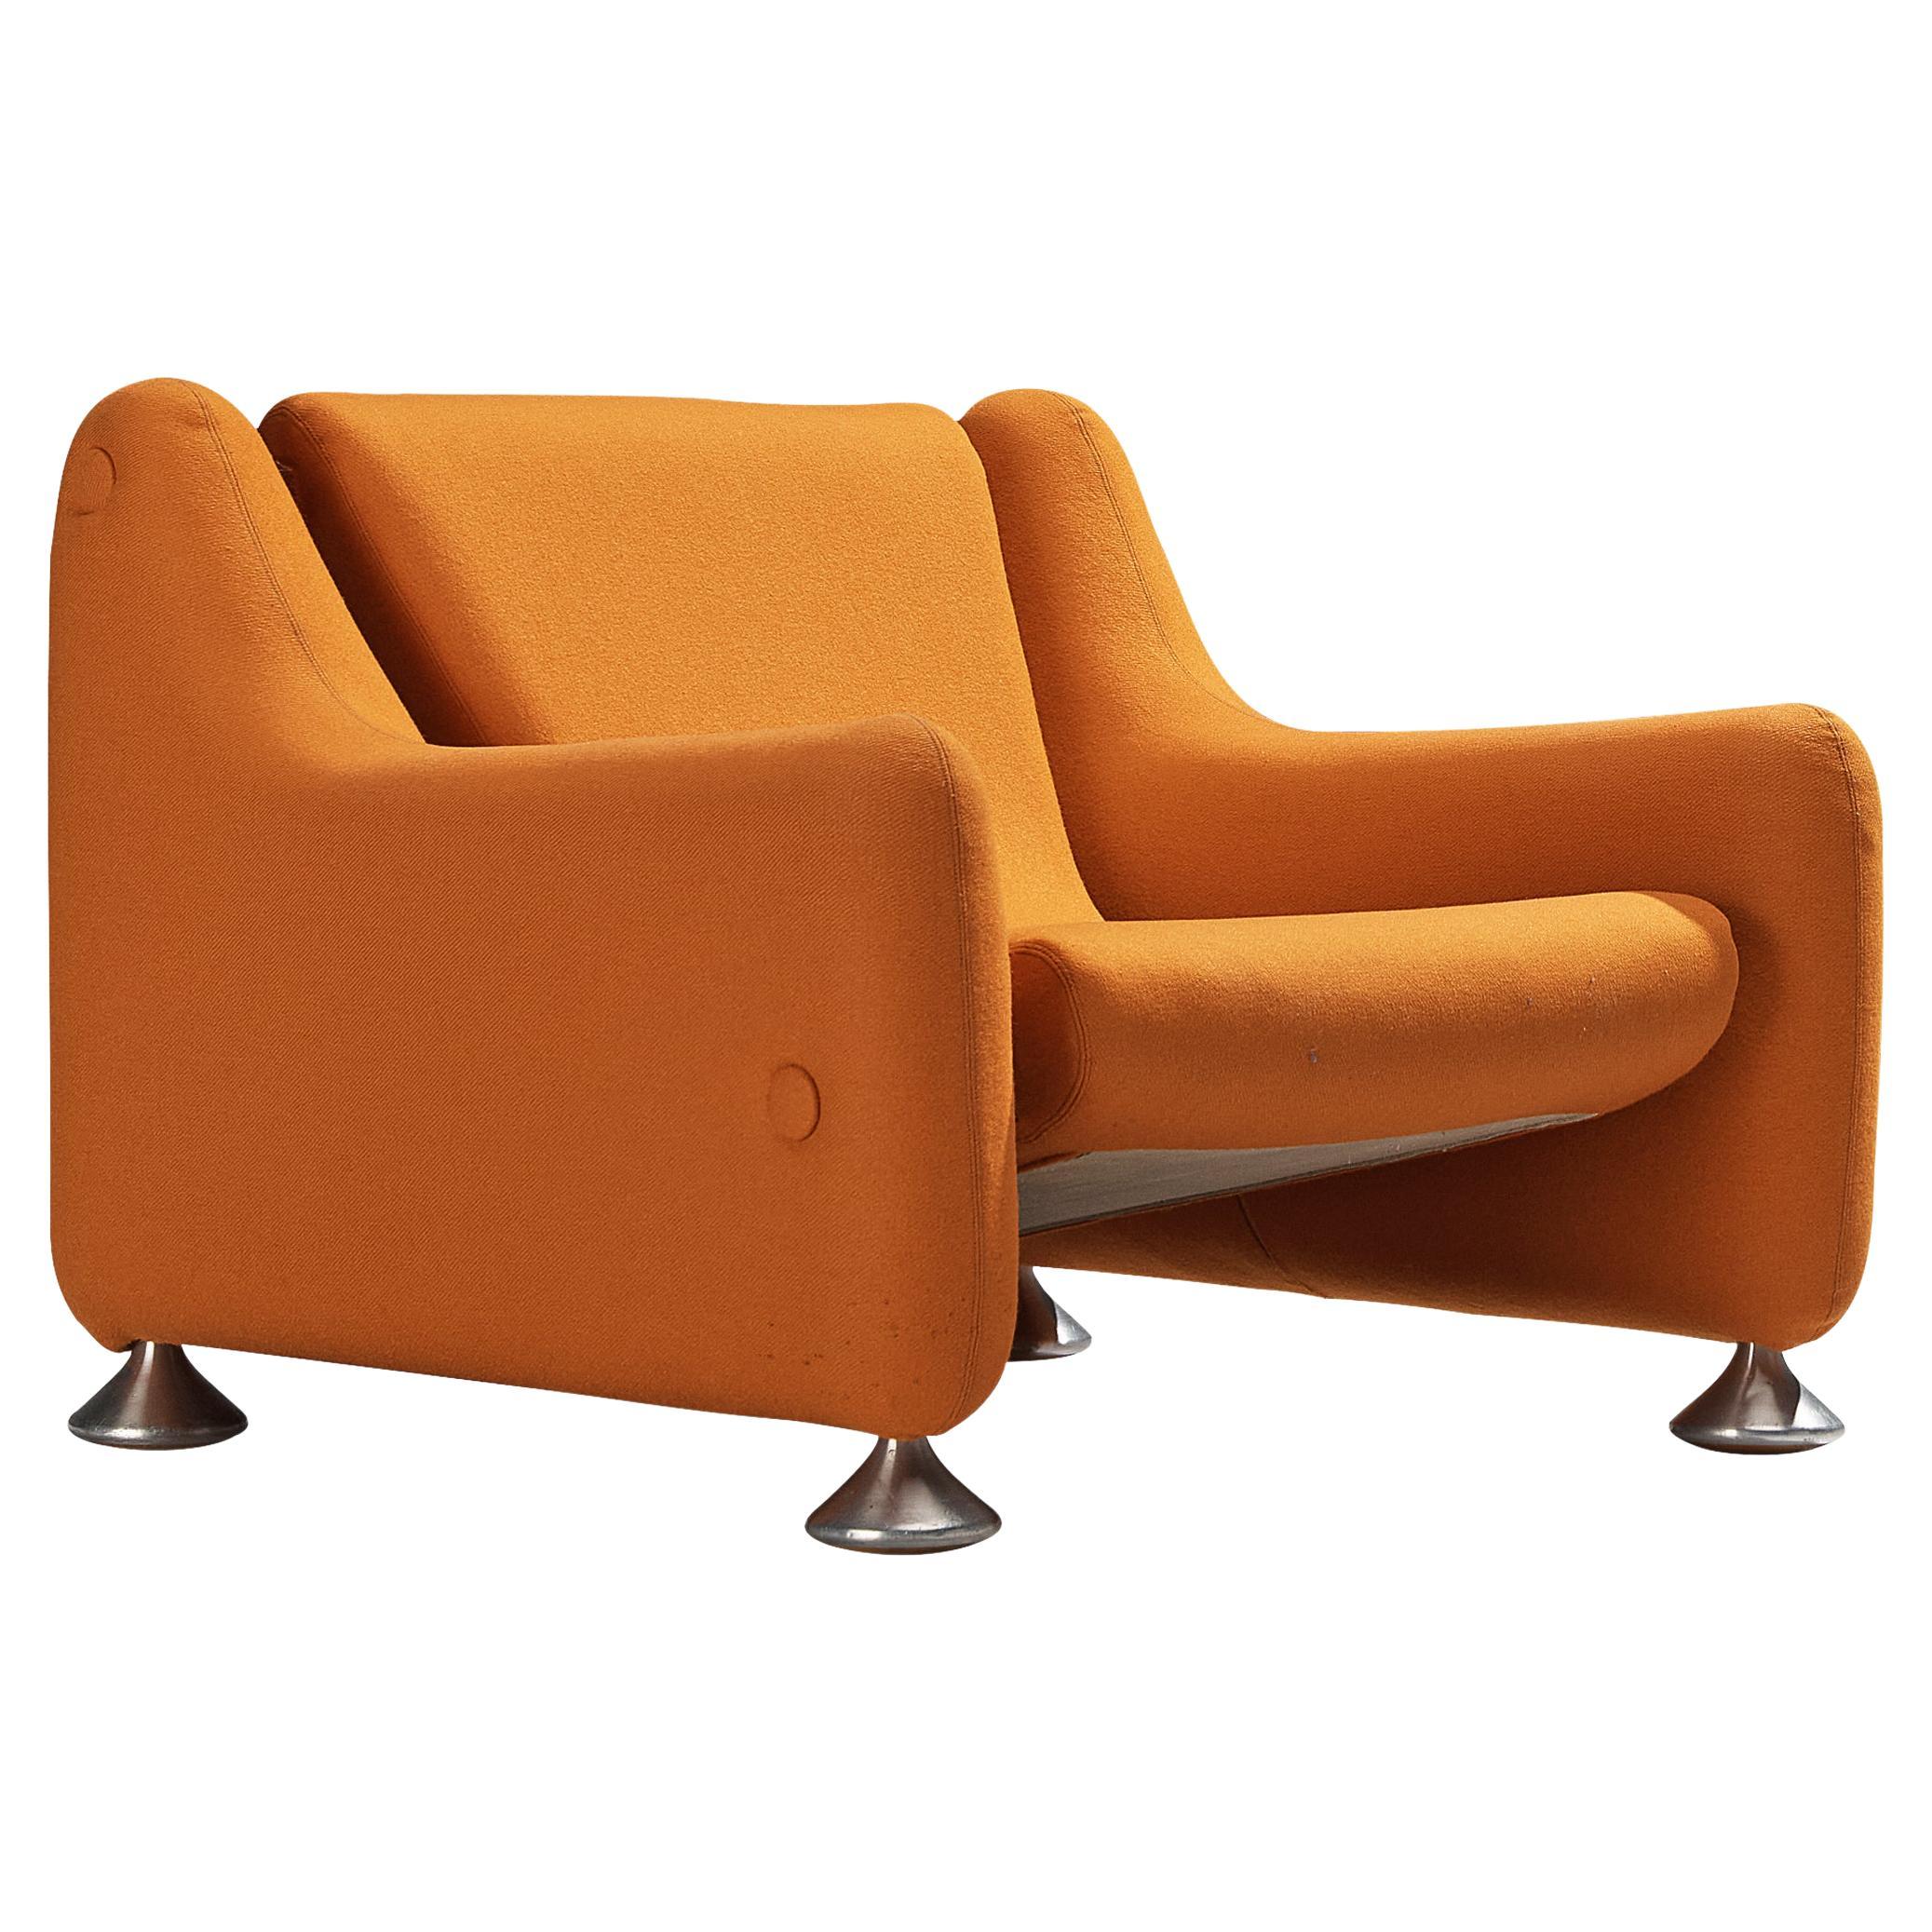 Rare Luigi Colani for Fritz Hansen Lounge Chair in Orange Upholstery